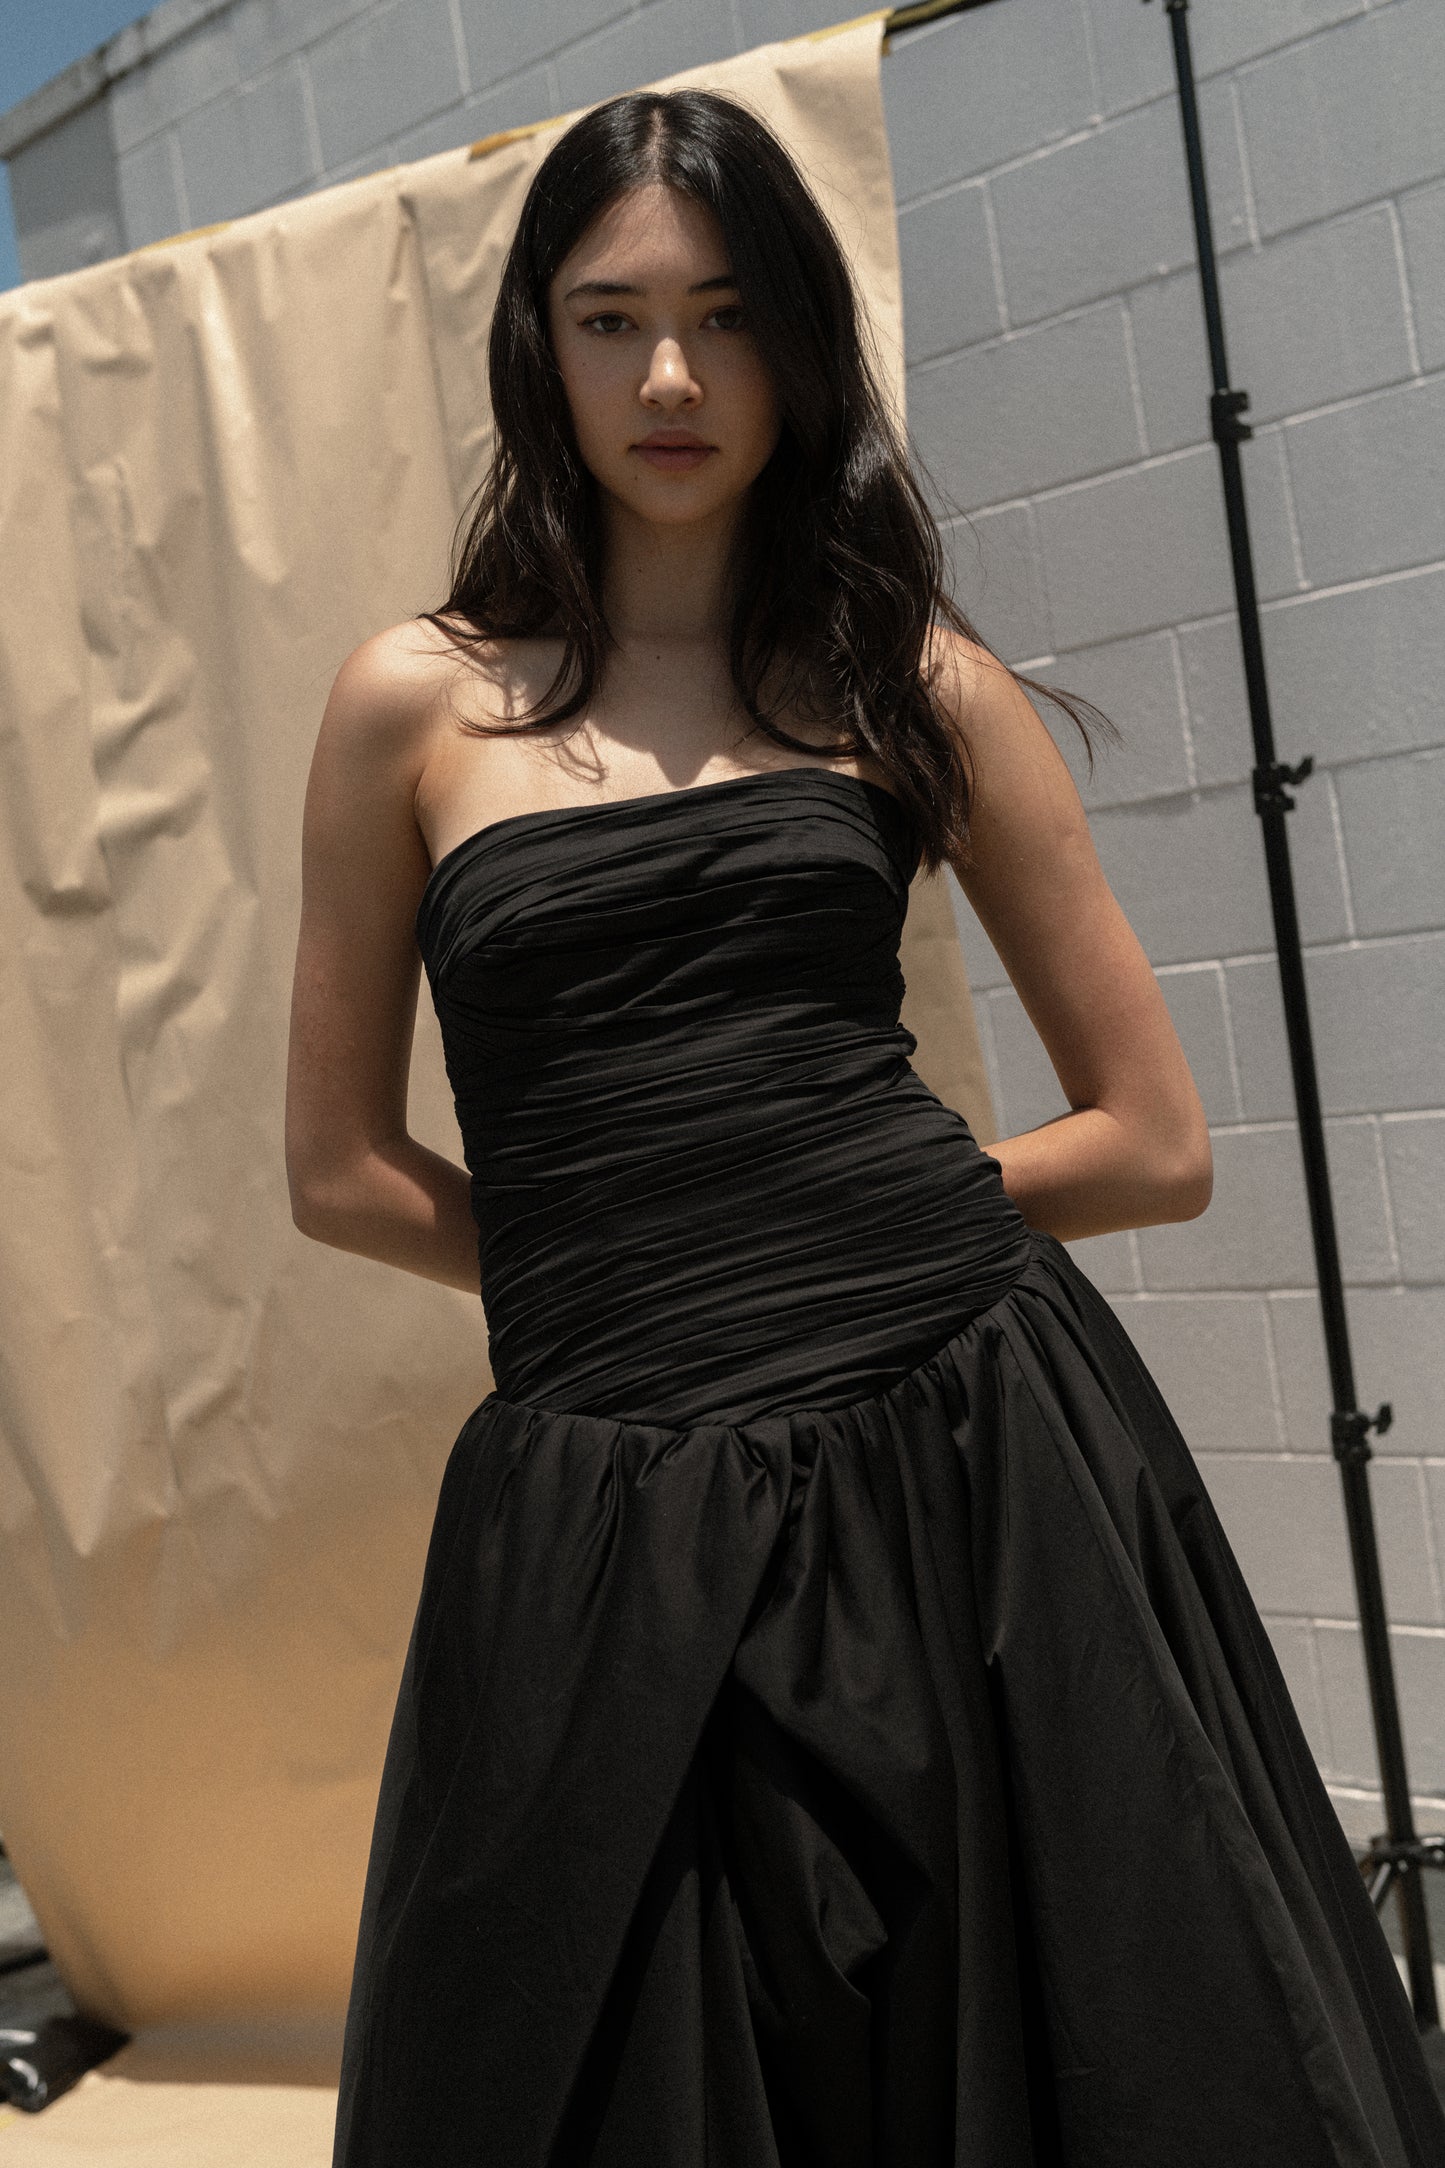 Violette Bubble Hem Black Maxi Dress